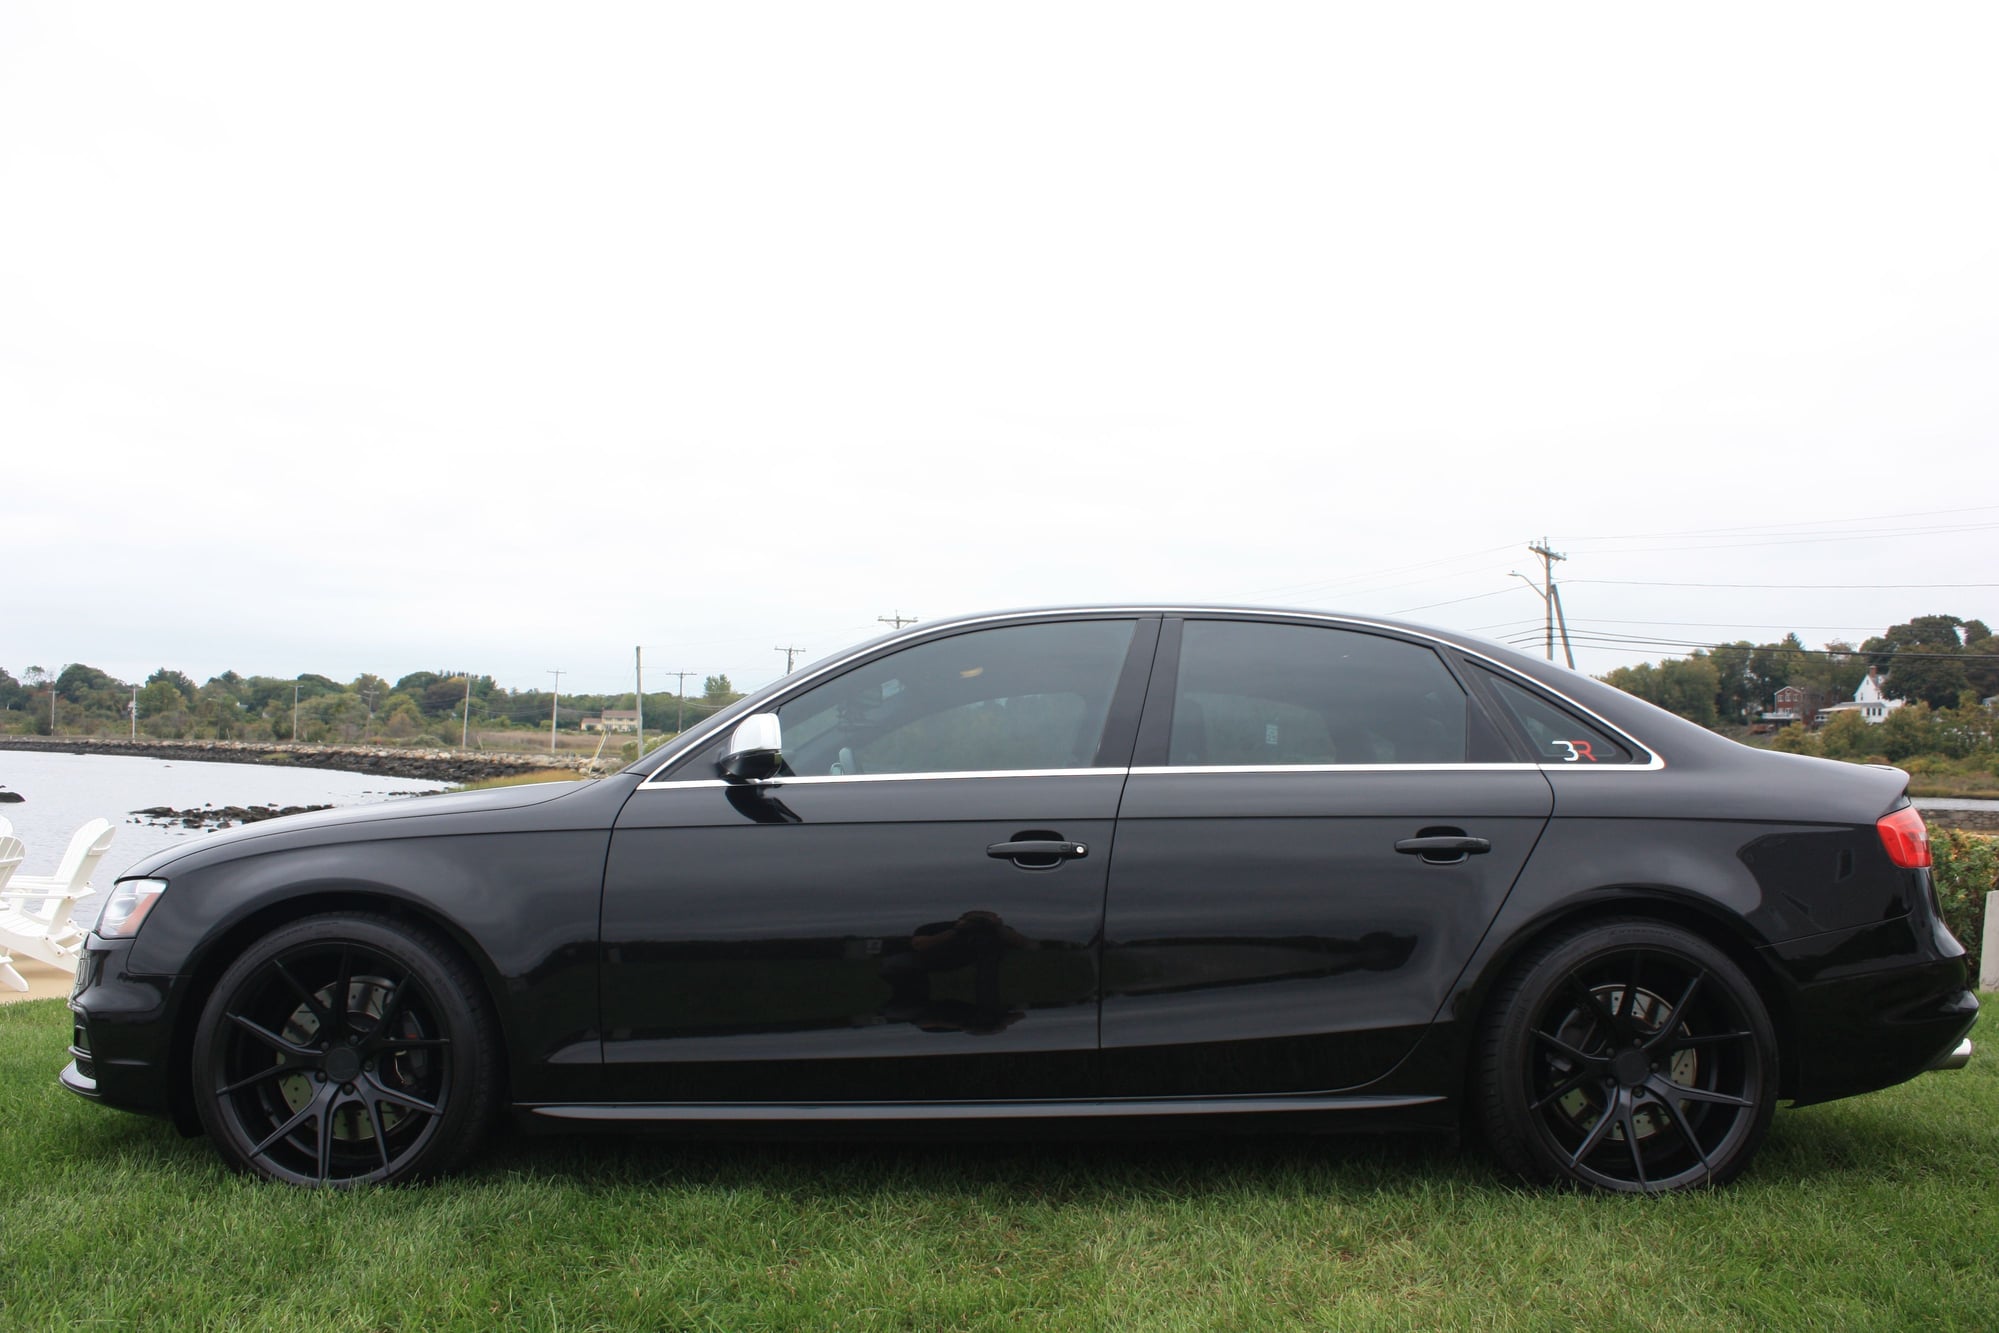 2015 Audi S4 - AUDI S4 2015 CPO Black/Black - Used - VIN waubgafl0fa139525 - 53,000 Miles - 6 cyl - AWD - Automatic - Sedan - Black - Wakefield, MA 01880, United States